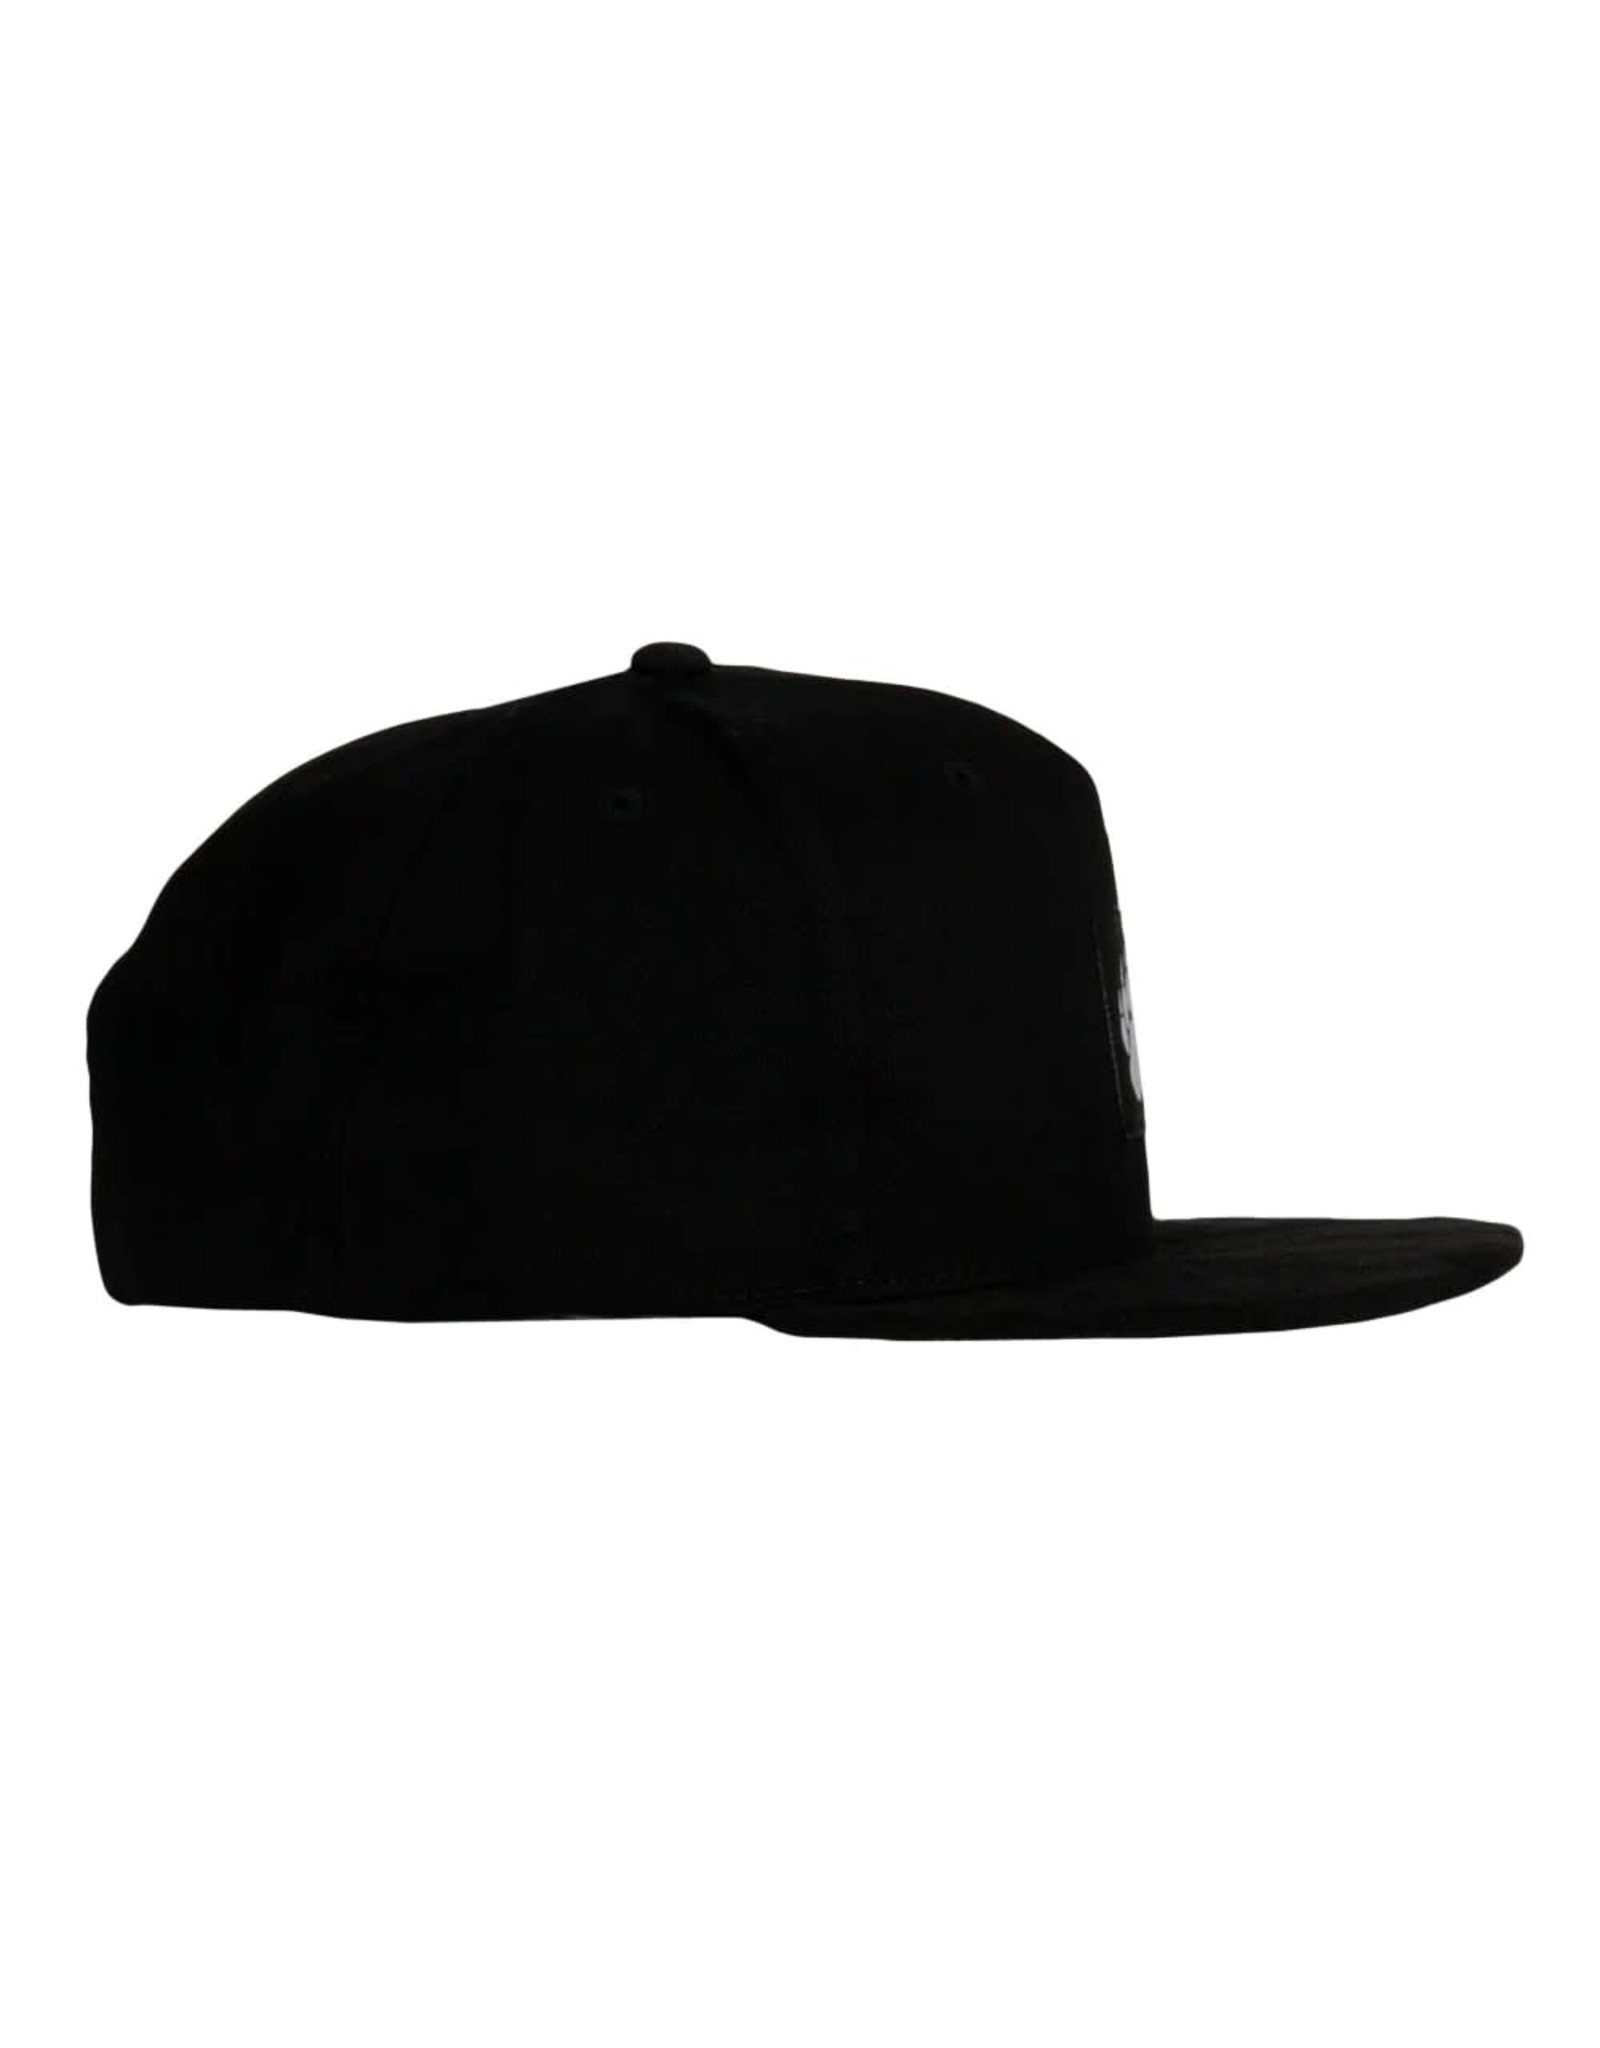 Bear Paw Removable Earflap Black Snapback Hat L/XL